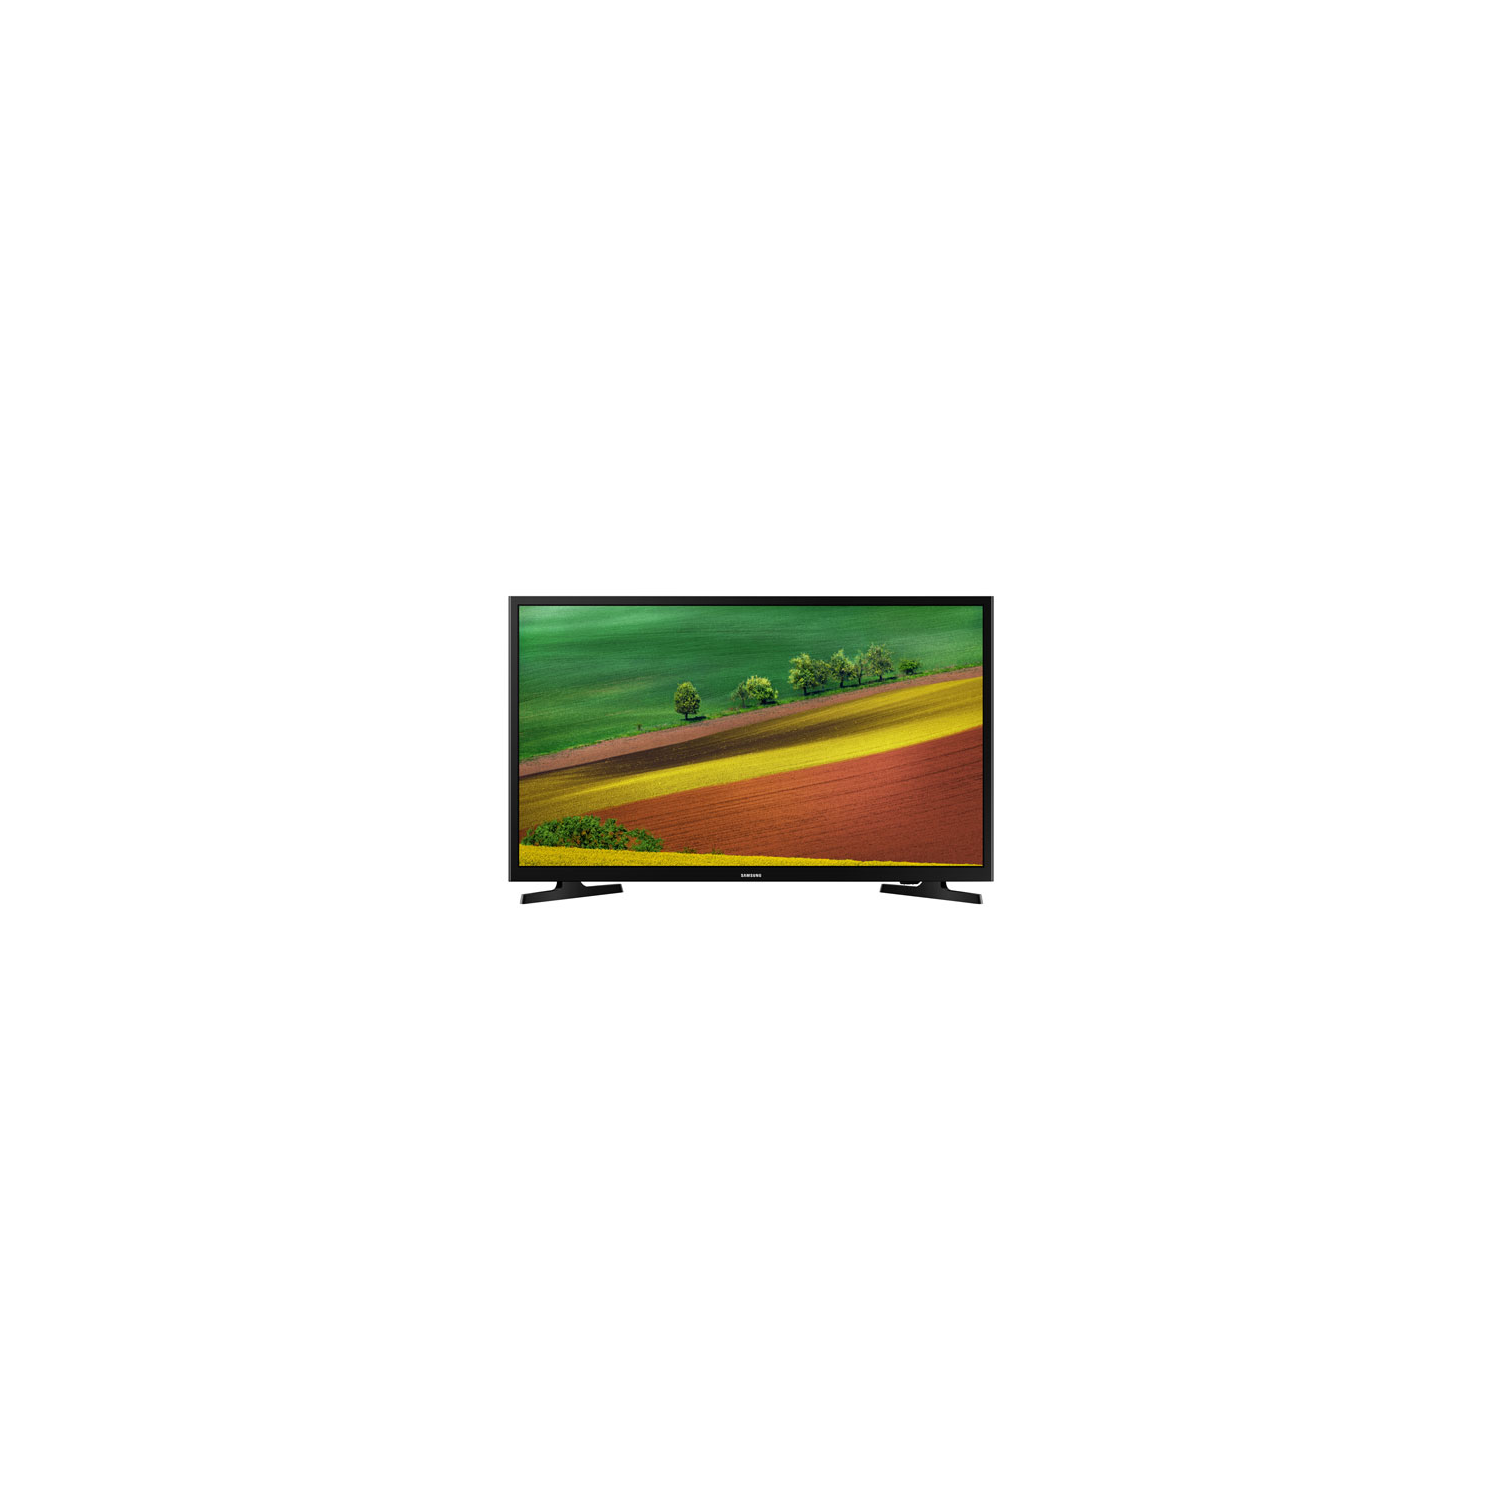 Open Box - Samsung 32" 720p HD LED Tizen Smart TV (UN32M4500BFXZC) - Glossy Black - Like New (Condition 10/10)